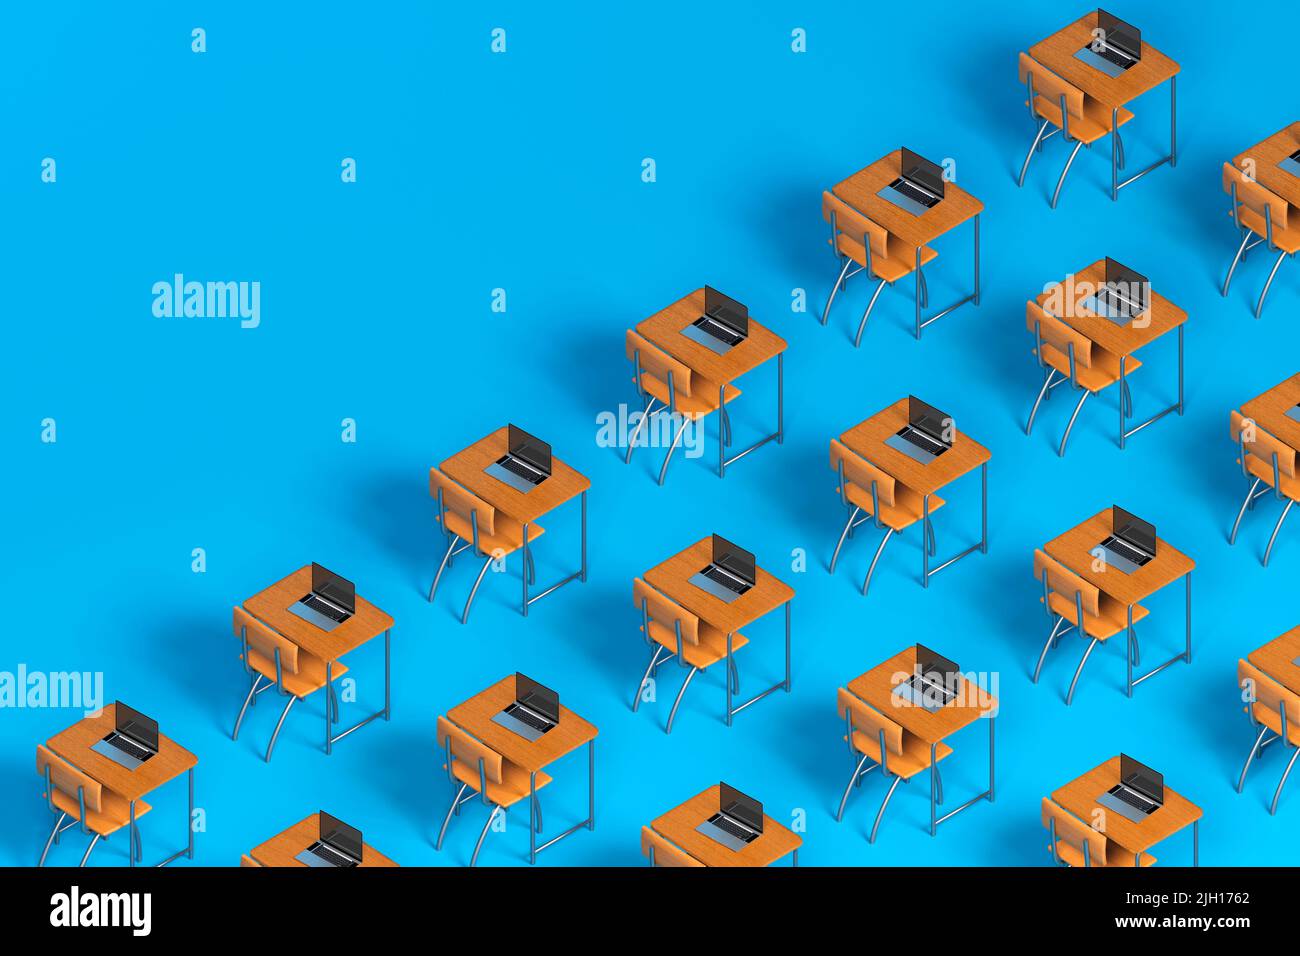 large pattern of School desks, books and laptops. 3d render Stock Photo